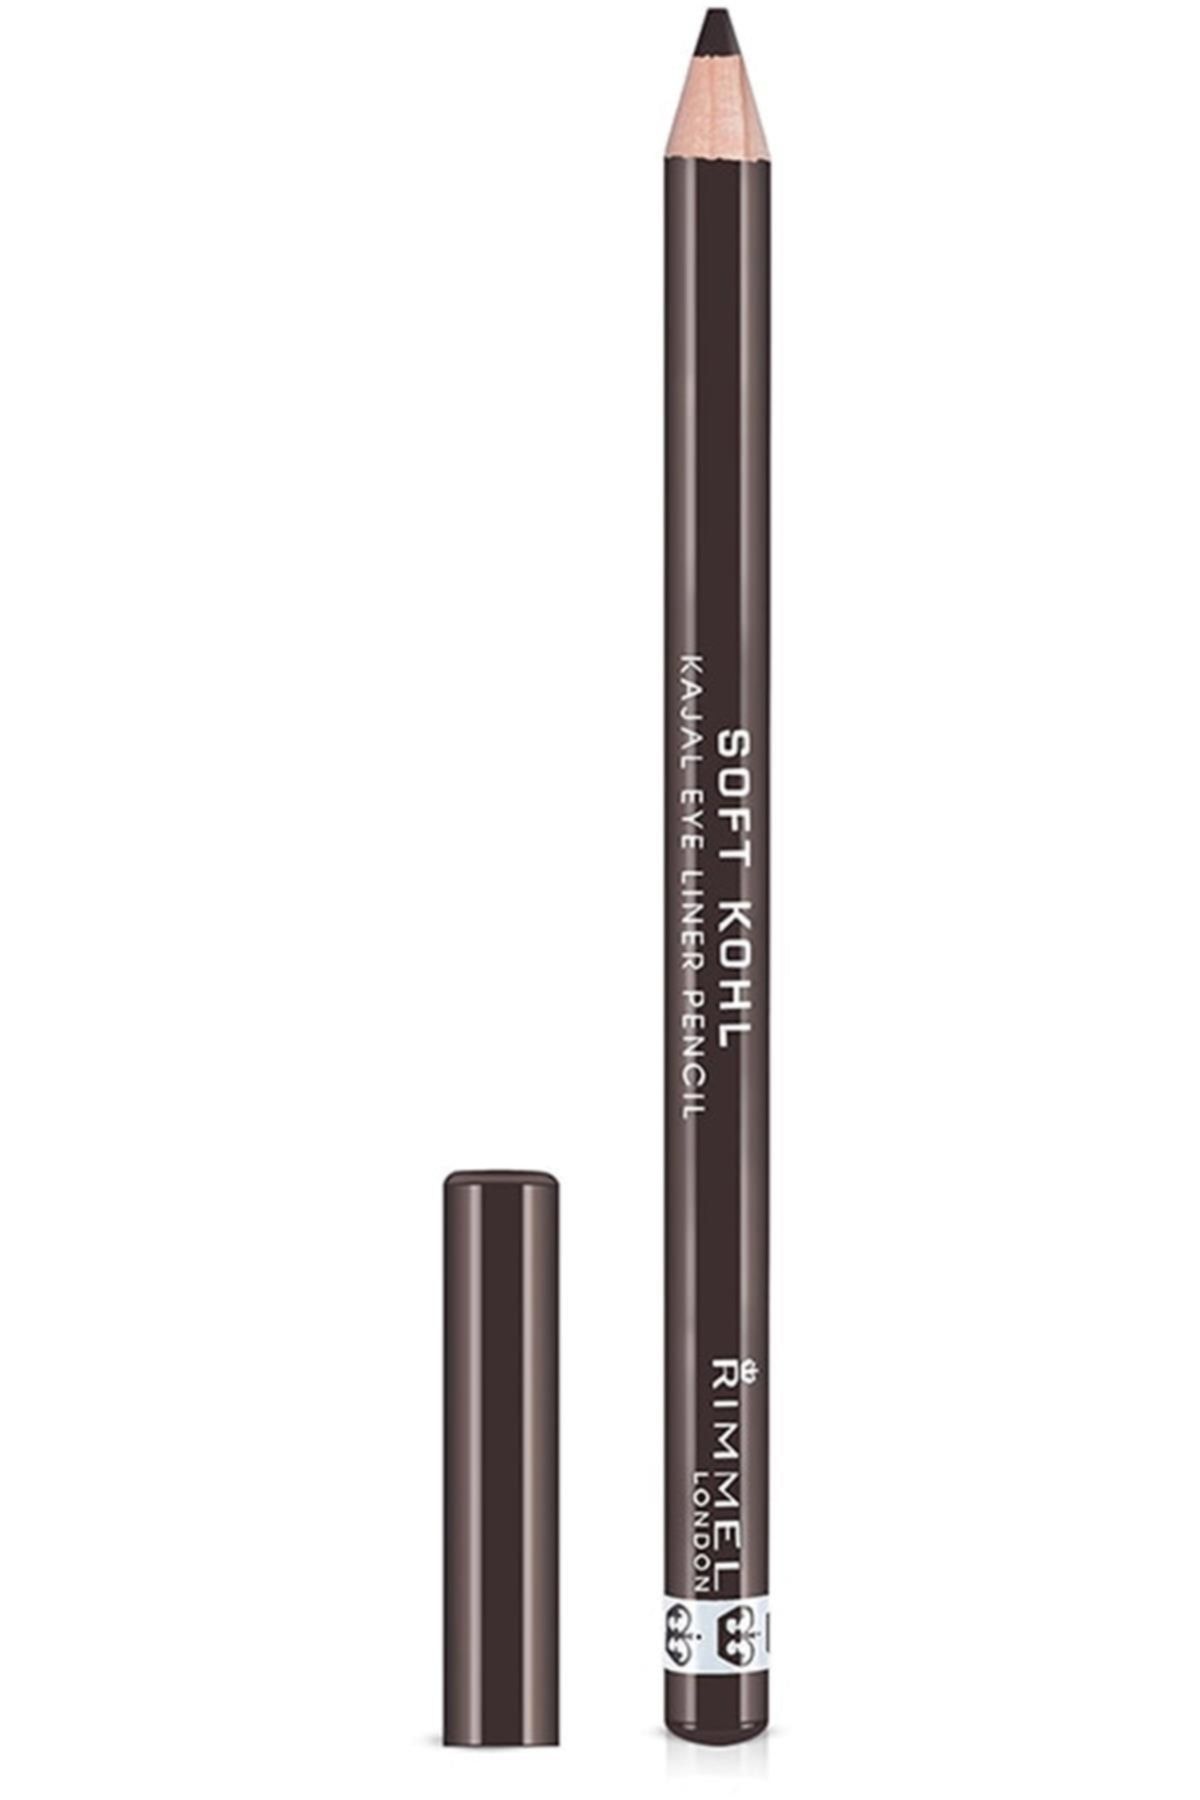 Rimmel London Marka: London Soft Kohl Kajal Eyeliner Pencil 001 Sable Brown Kategori: Eyeliner